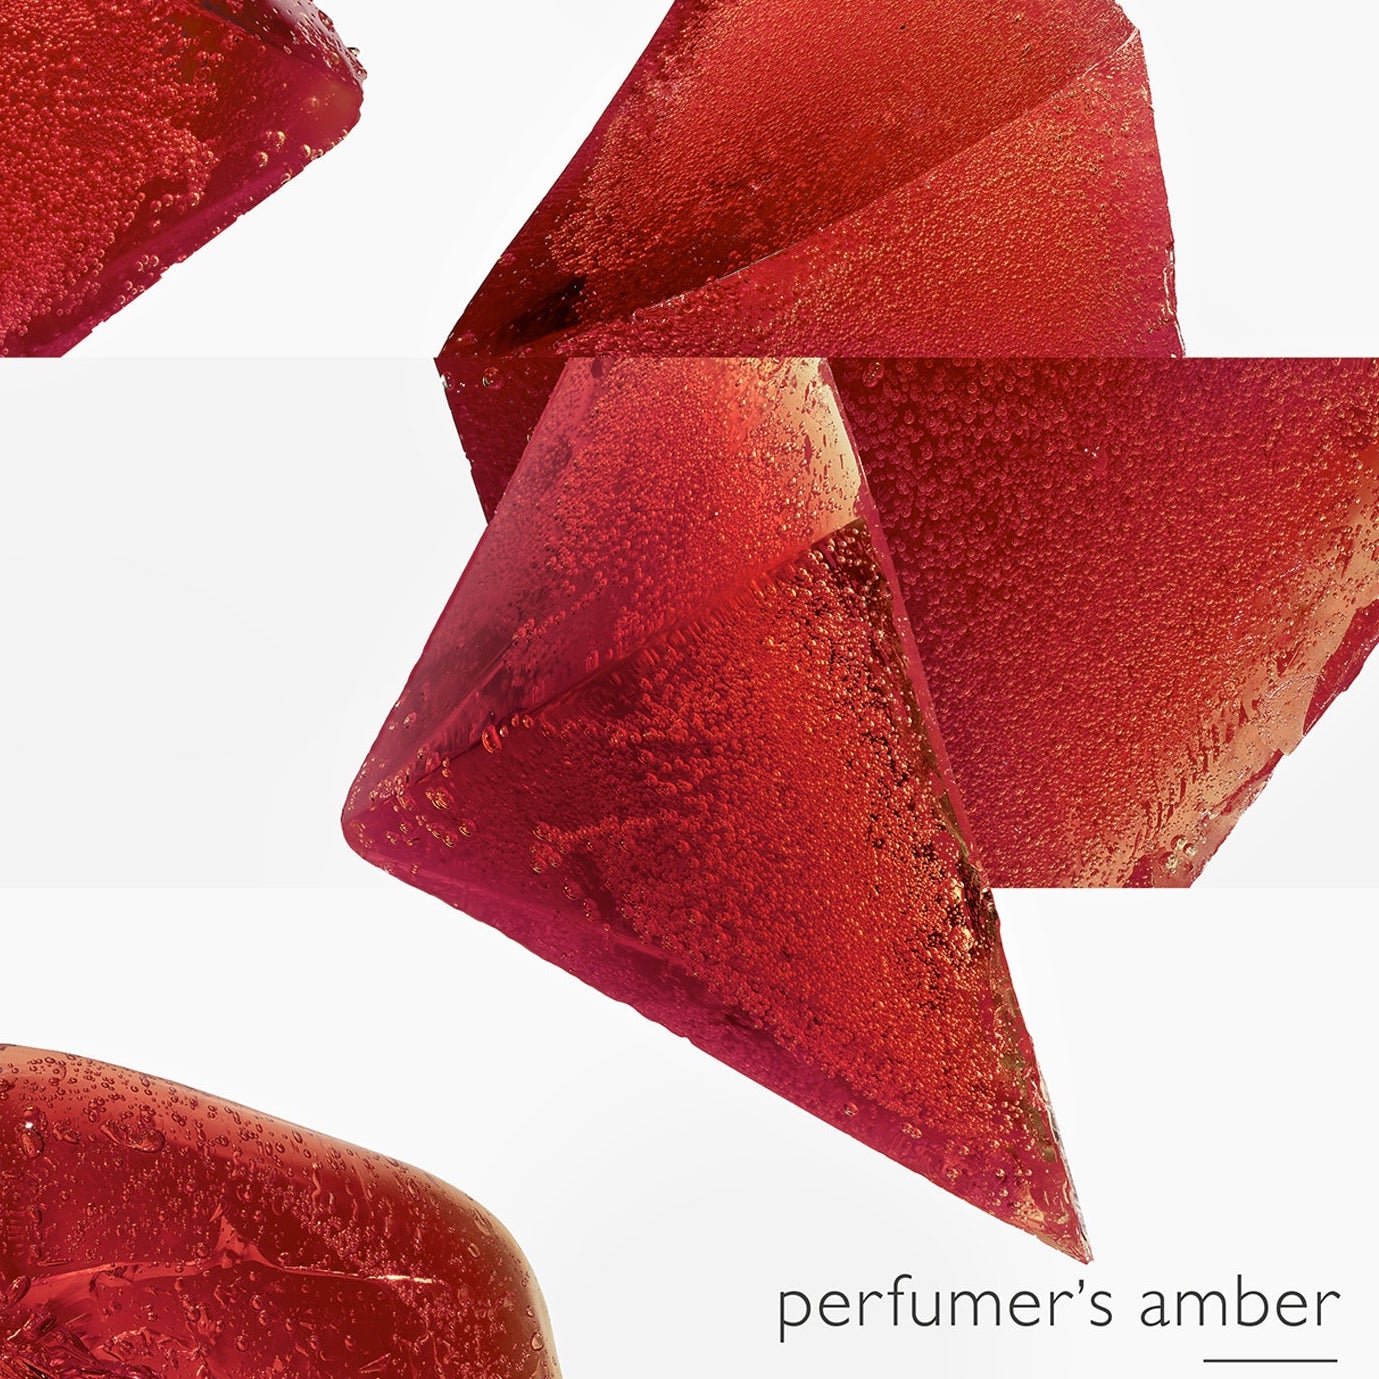 Hermes Eau De Mandarine Ambree Hand And Body Cleansing Gel | My Perfume Shop Australia